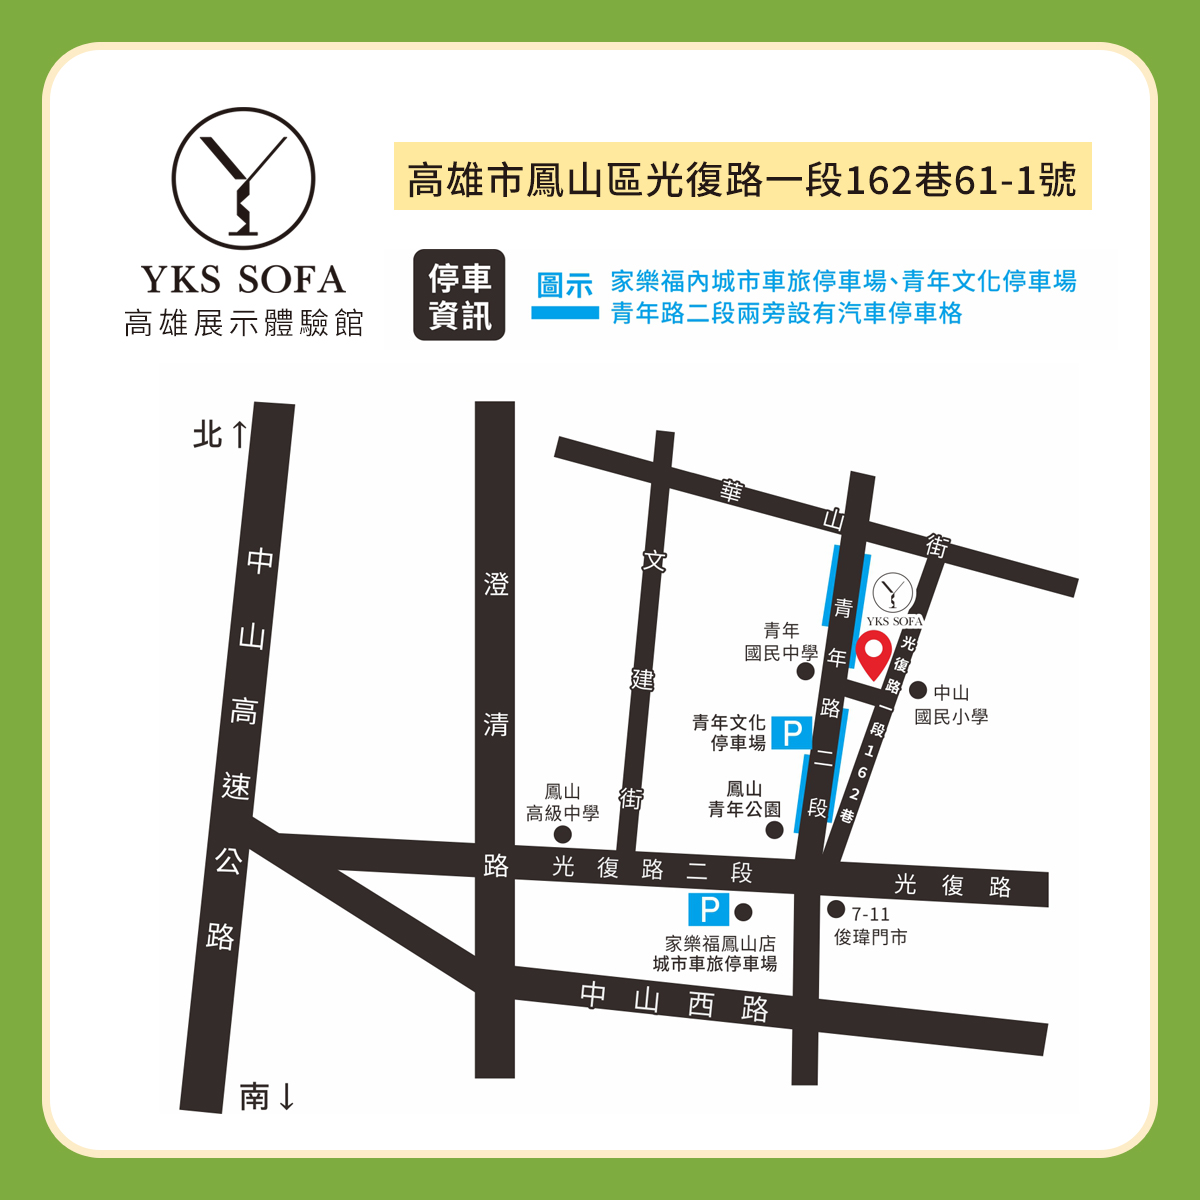 YKS SOFA高雄門市地圖